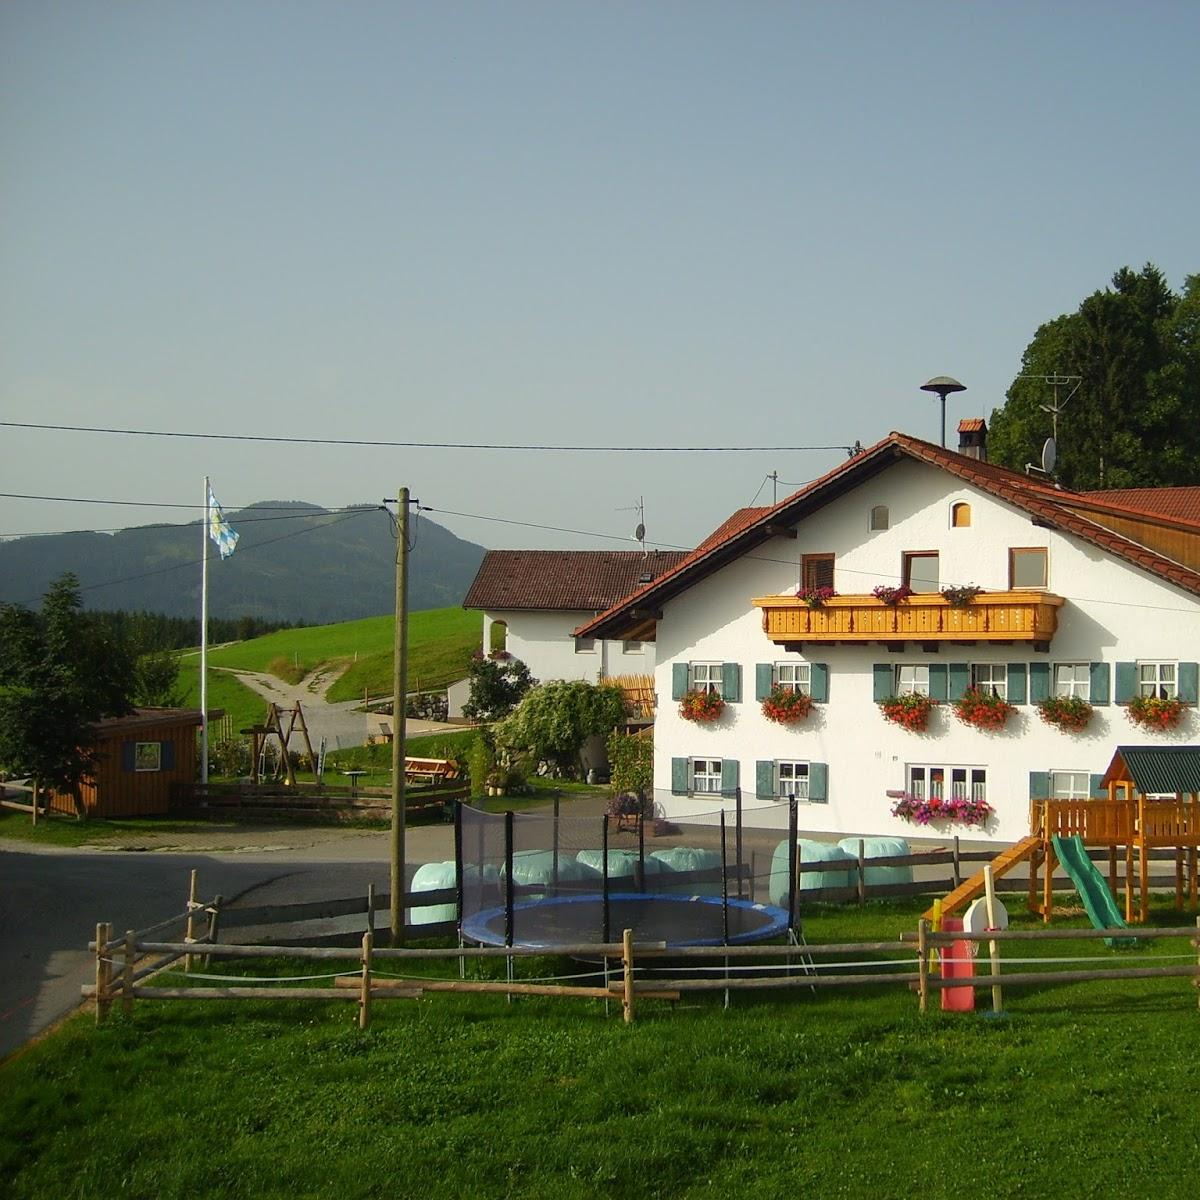 Restaurant "Martelerhof" in Rückholz